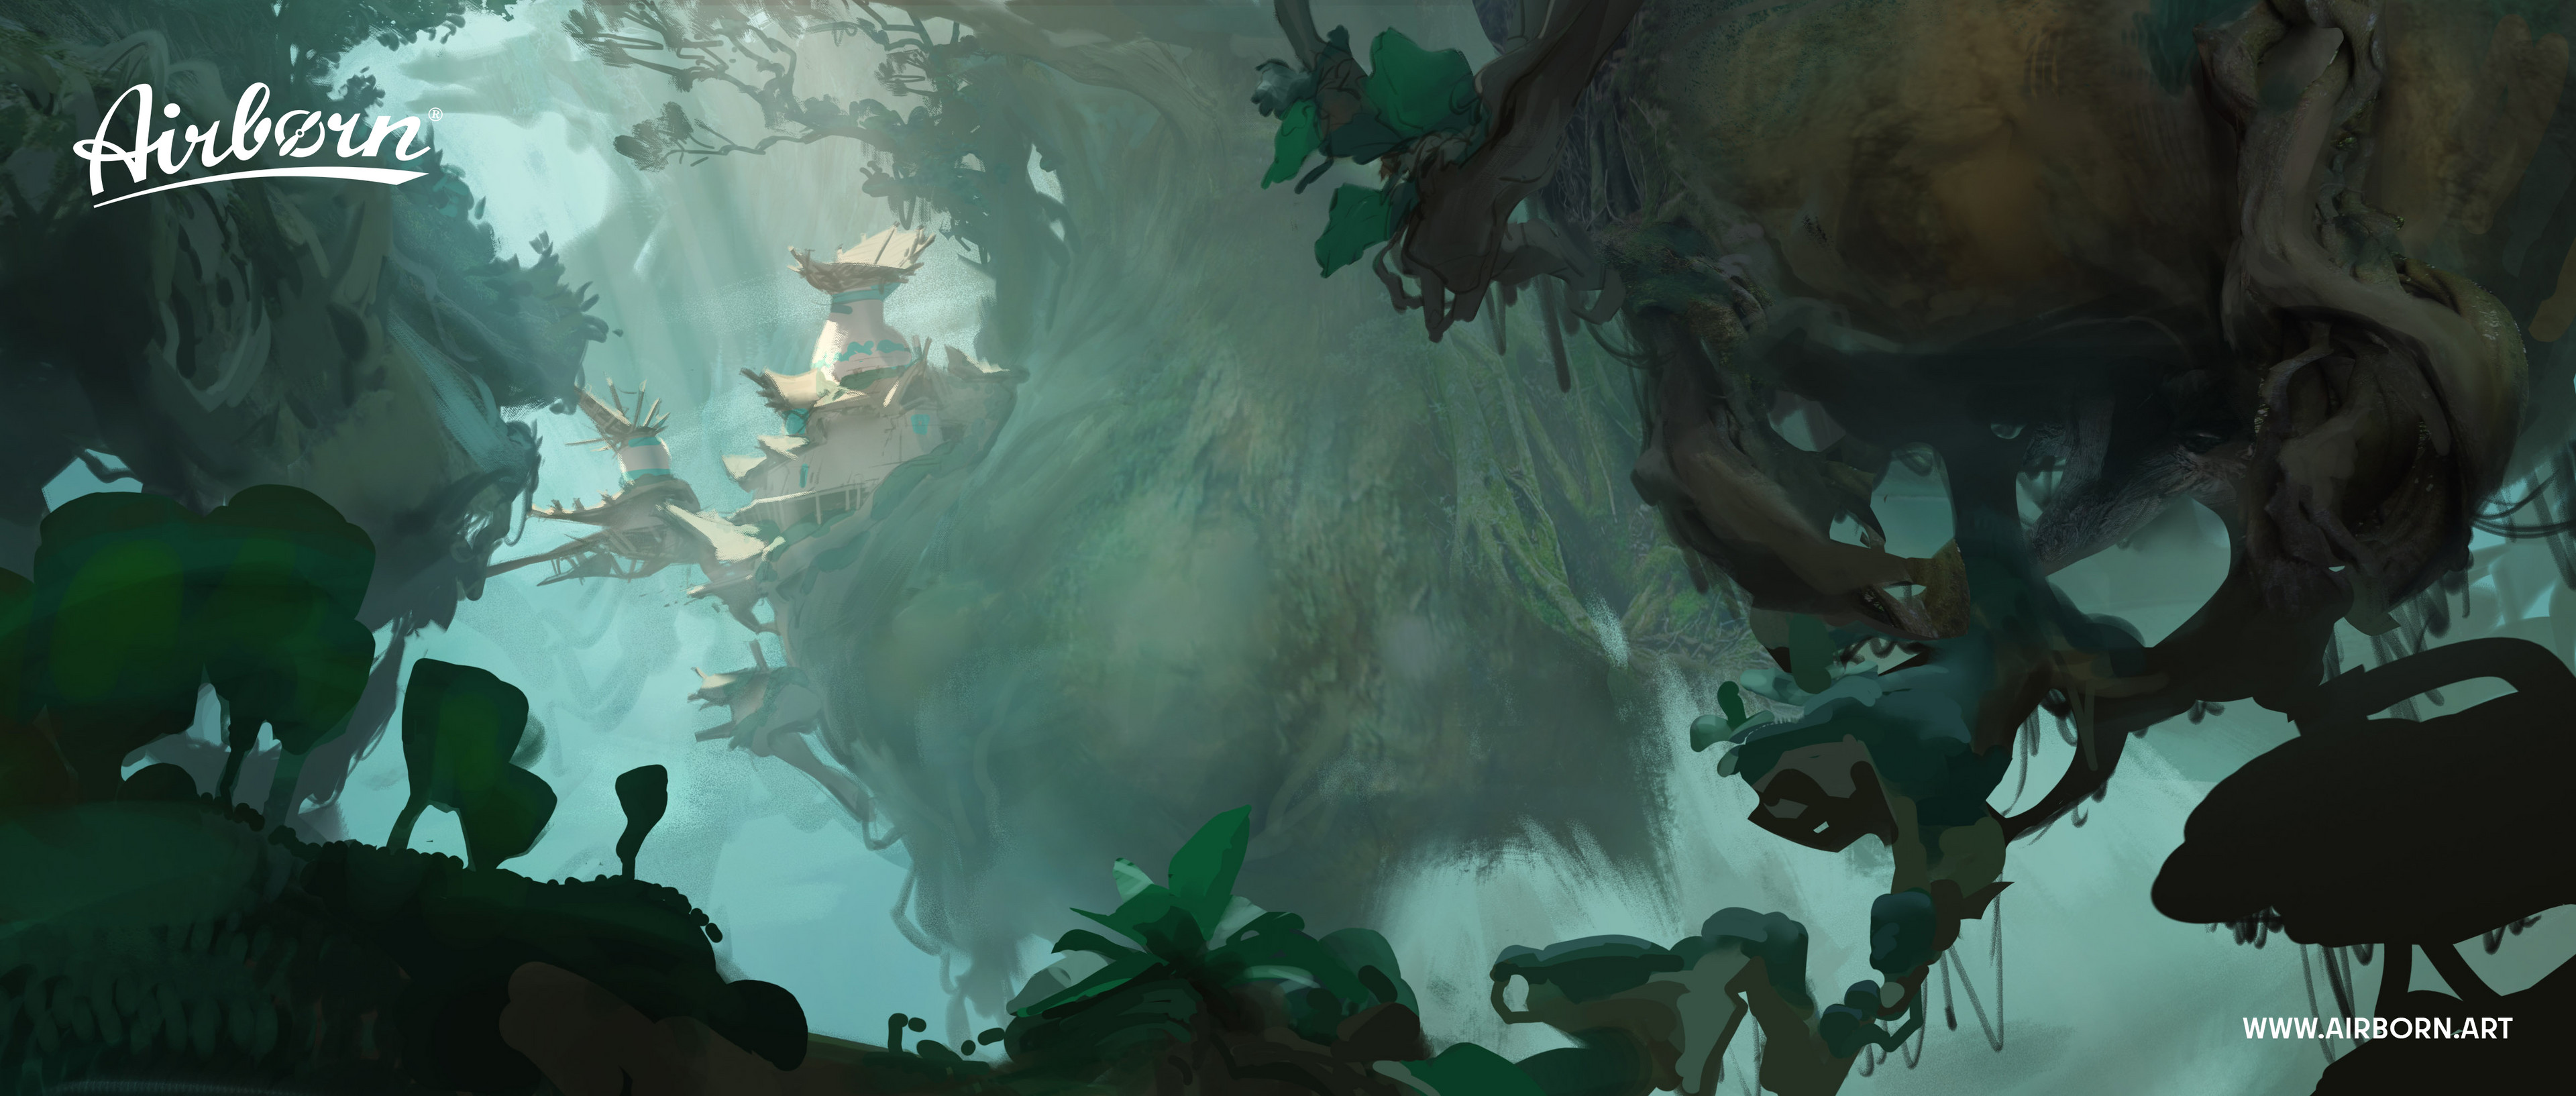 Inside the tree island area, early mood painting